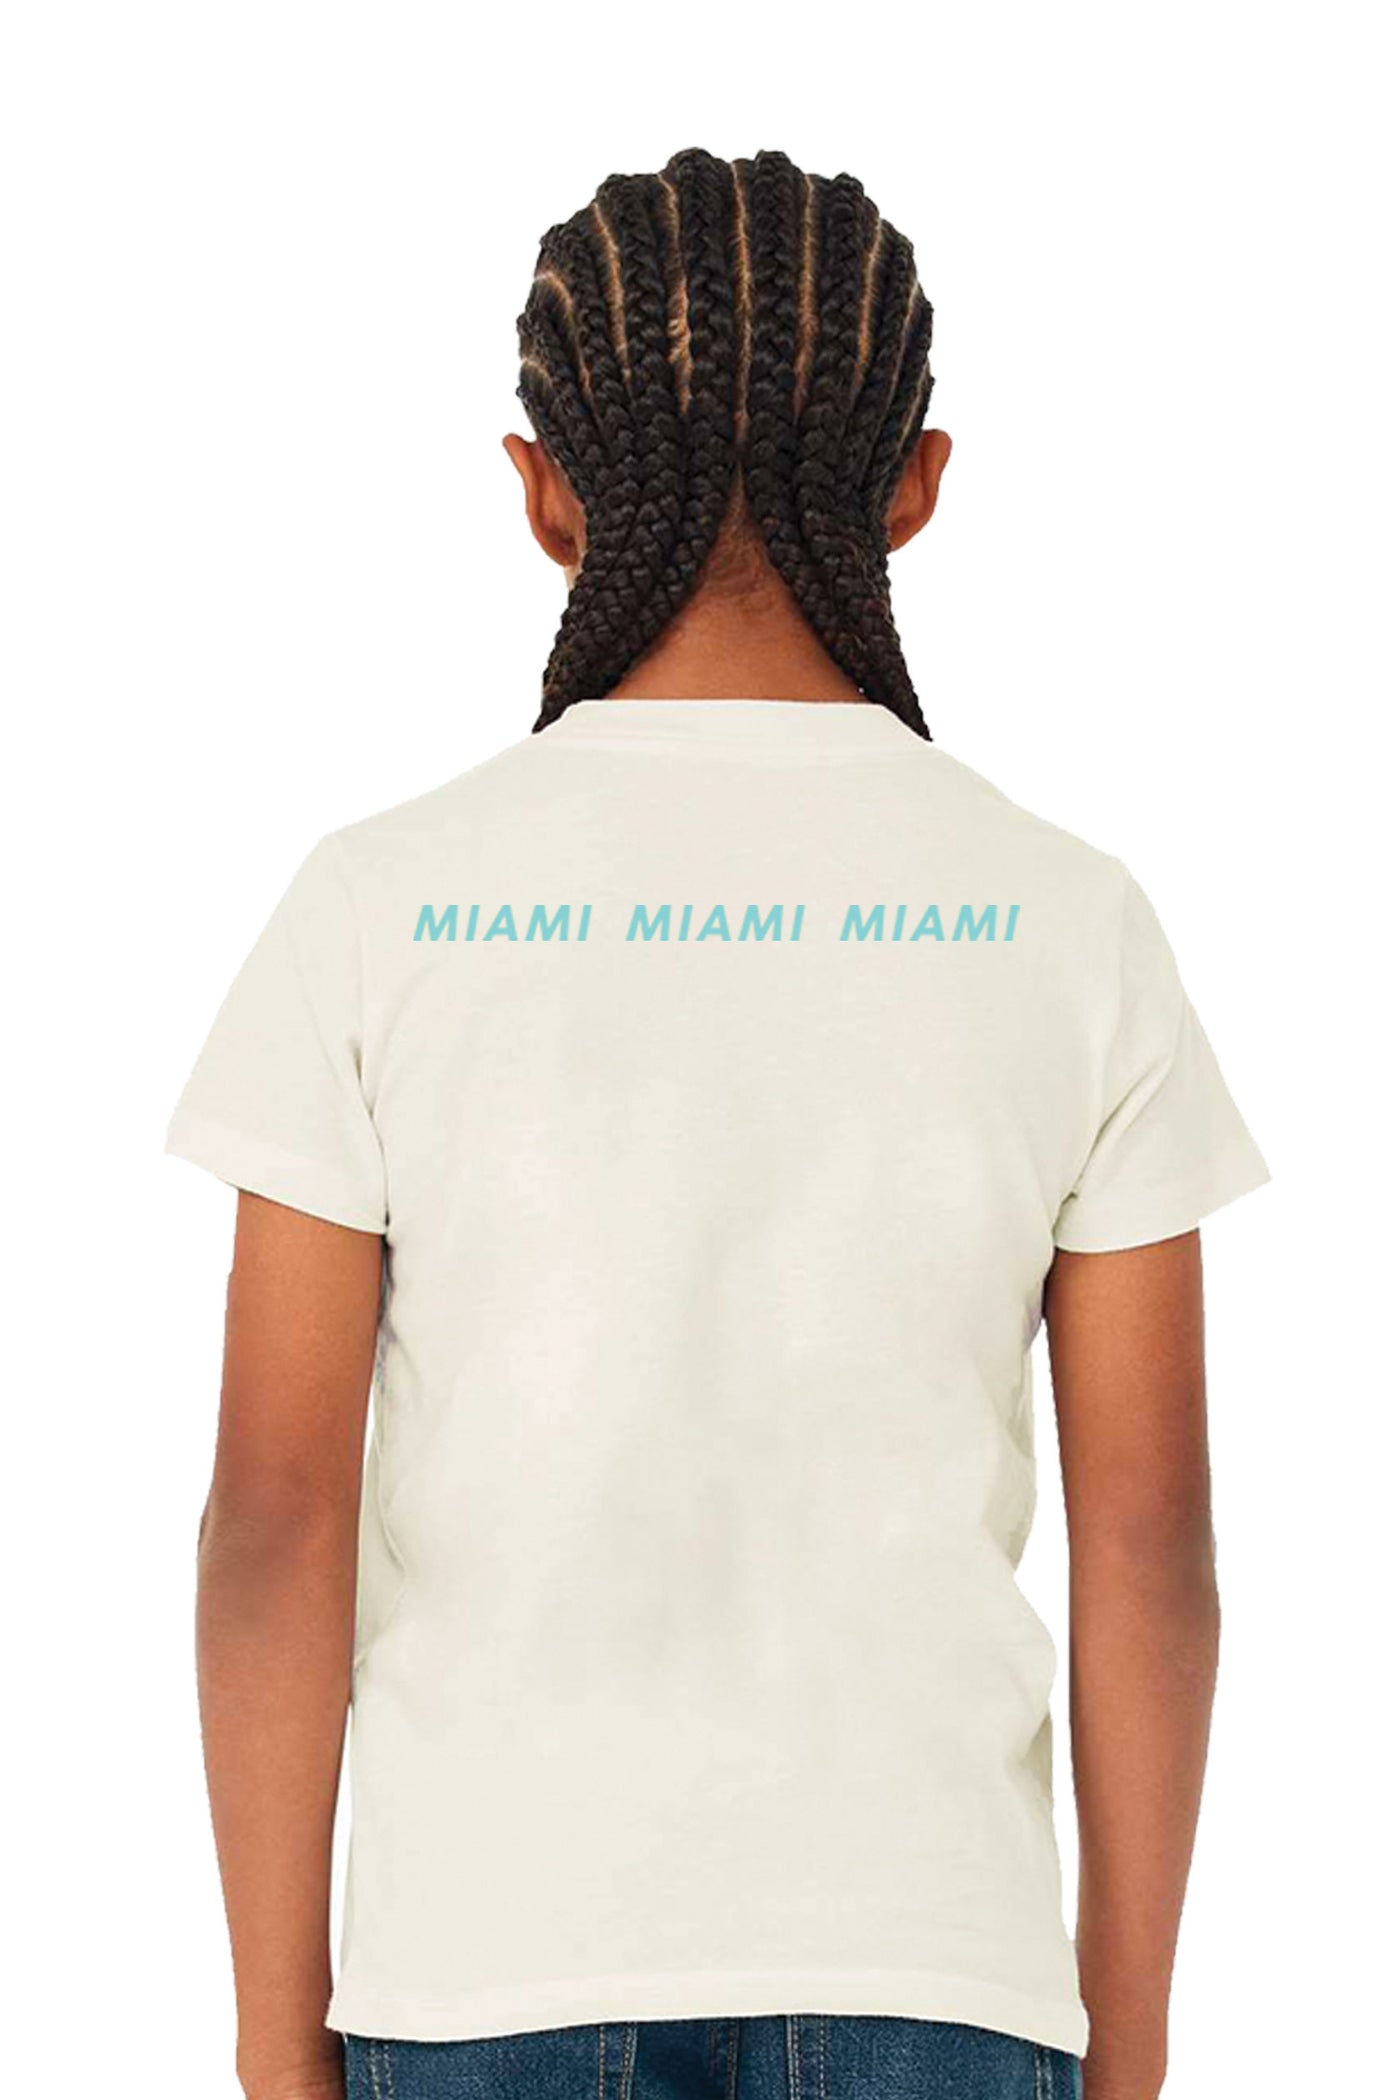 Kids Miami T-shirt-Unisex